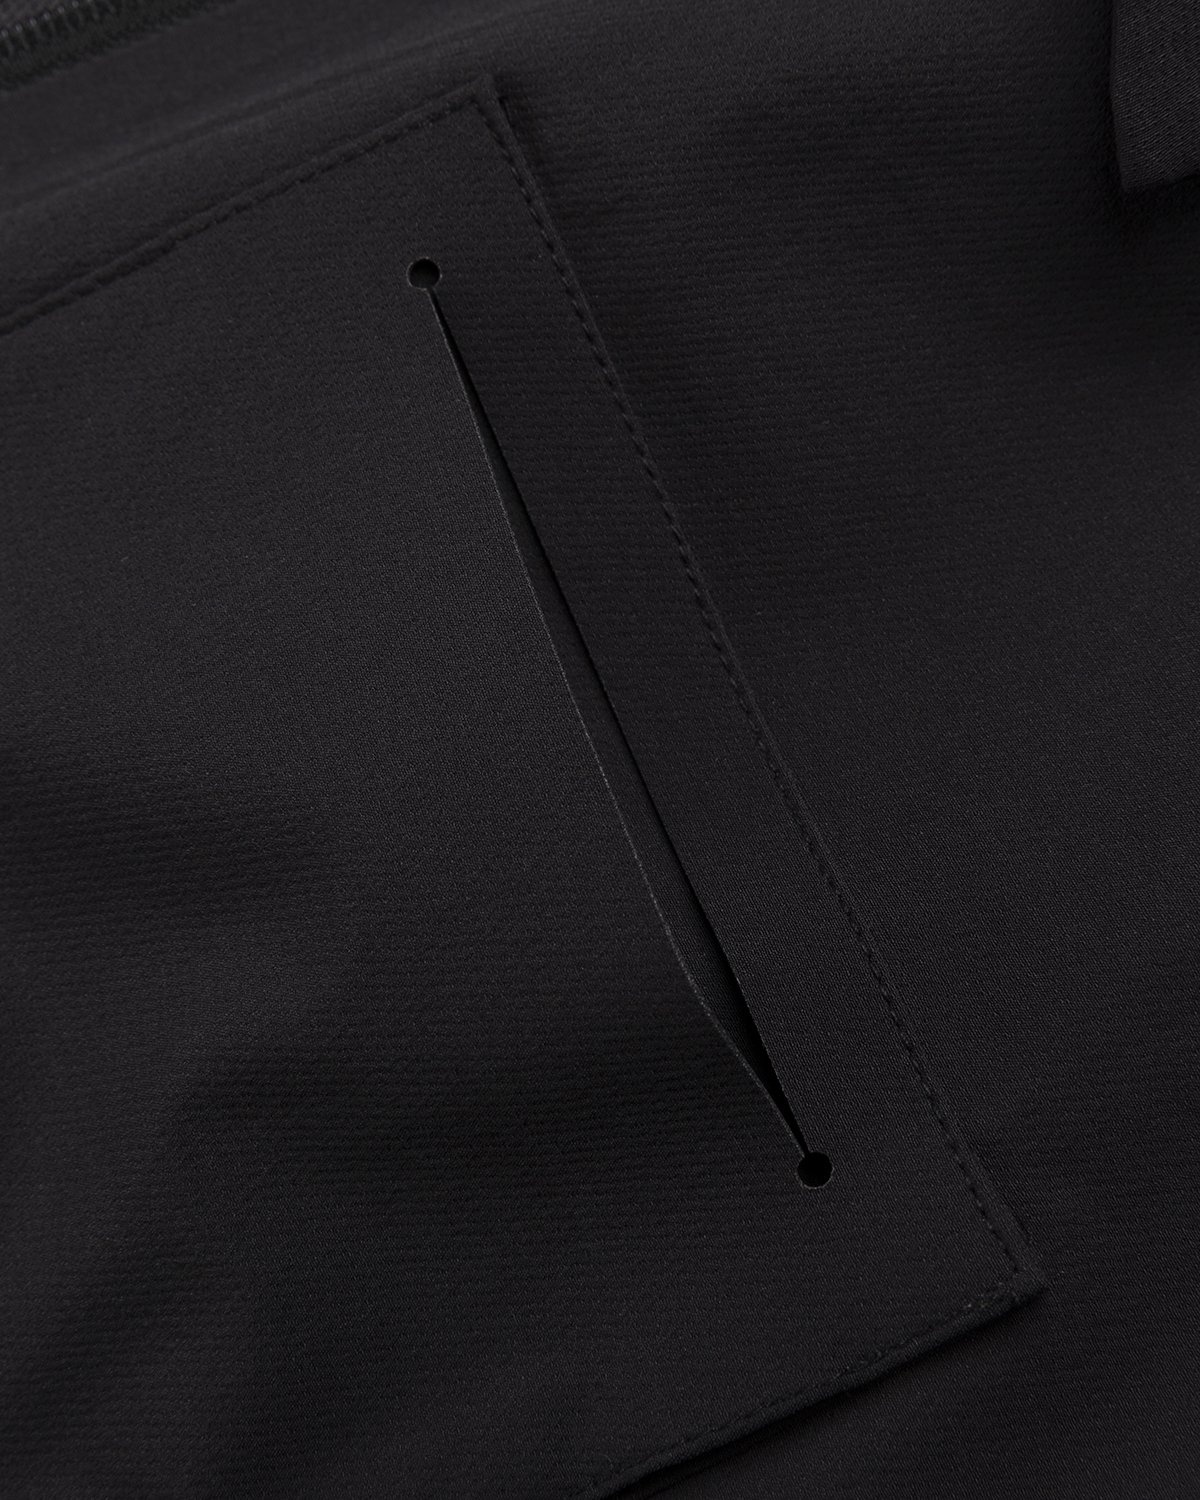 A-Cold-Wall* – Technical Overshirt Black - Overshirt - Black - Image 6